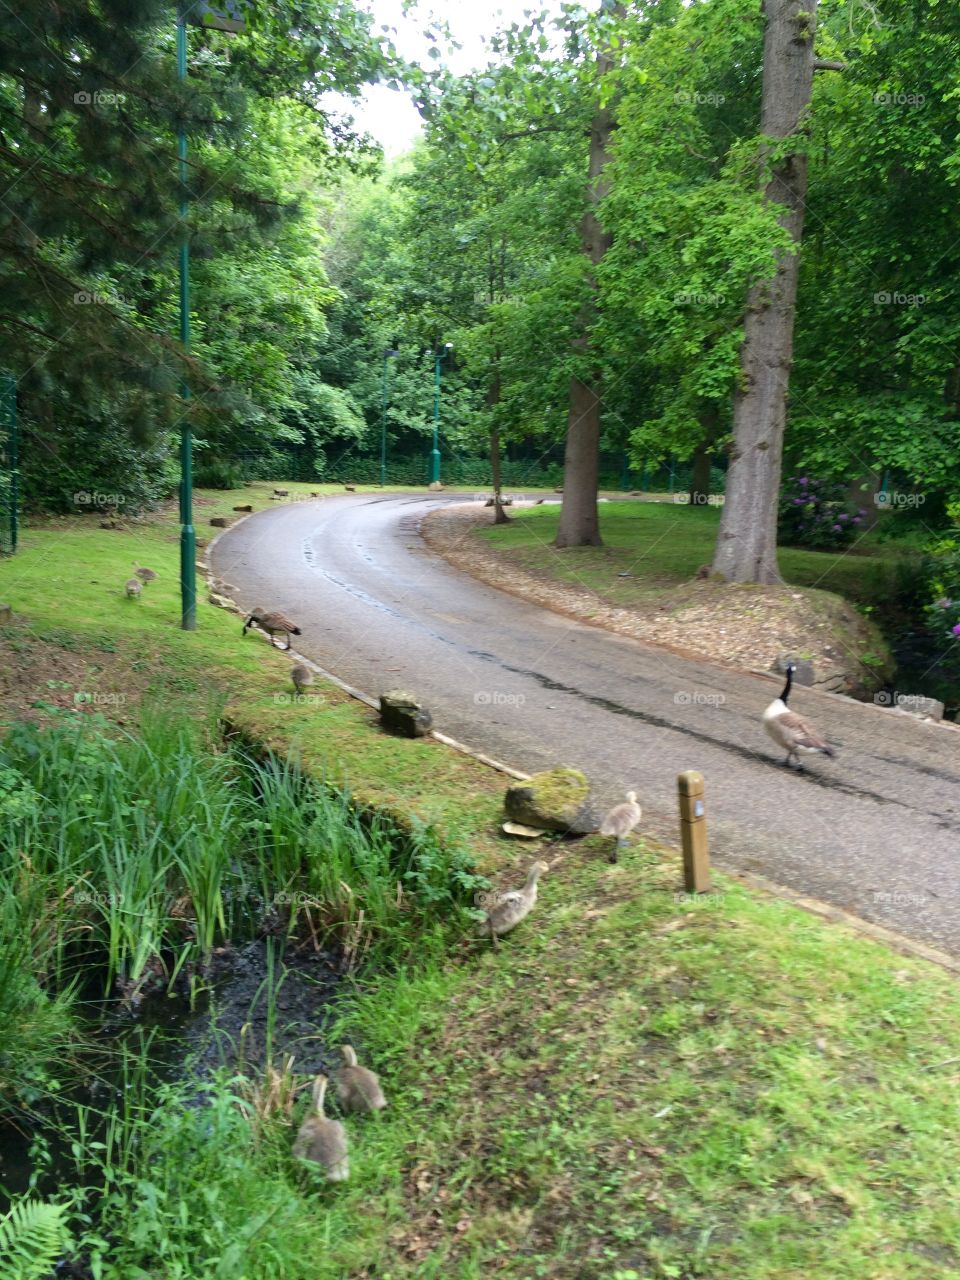 Family of Canada Geese negotiate a woodland road in Surrey. Family of Canada Geese, Chertsey, Surrey, England